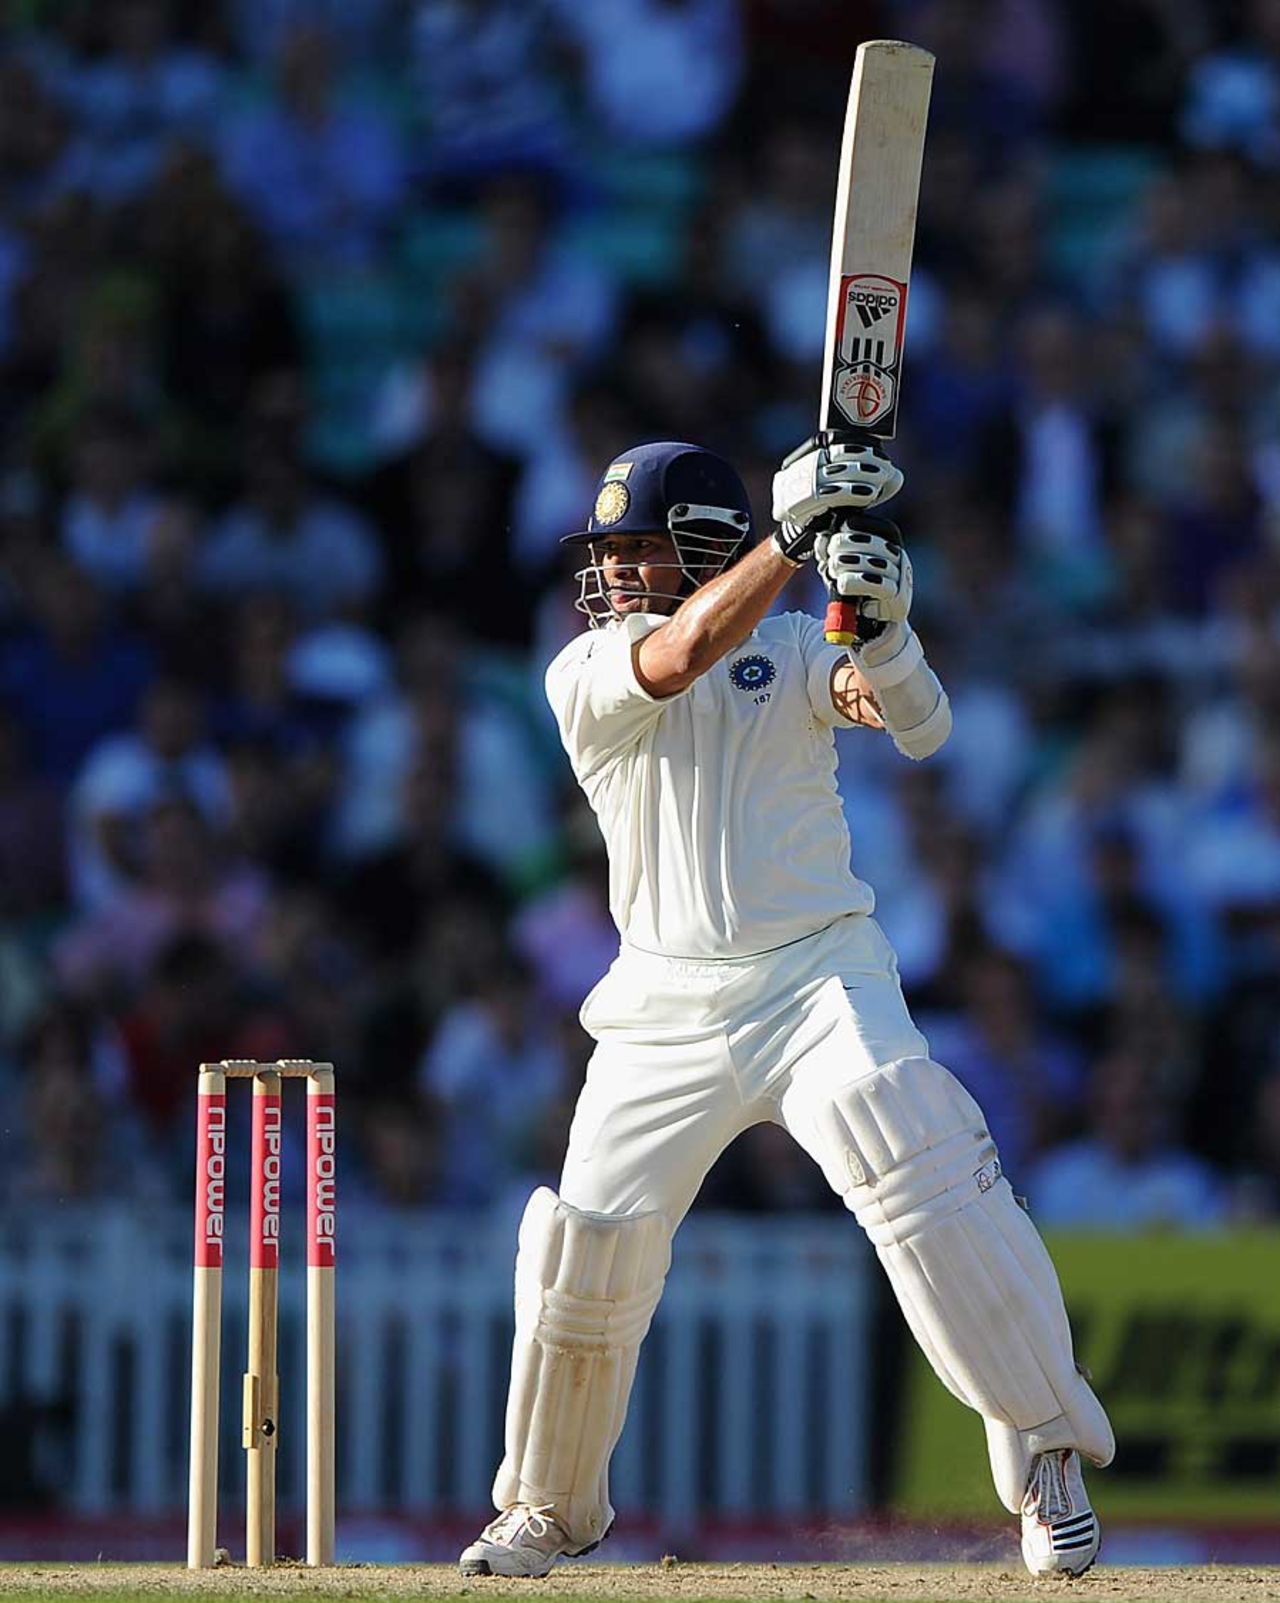 Sachin Tendulkar flays one through the off side, England v India, 4th Test, The Oval, 3rd day, August 20, 2011